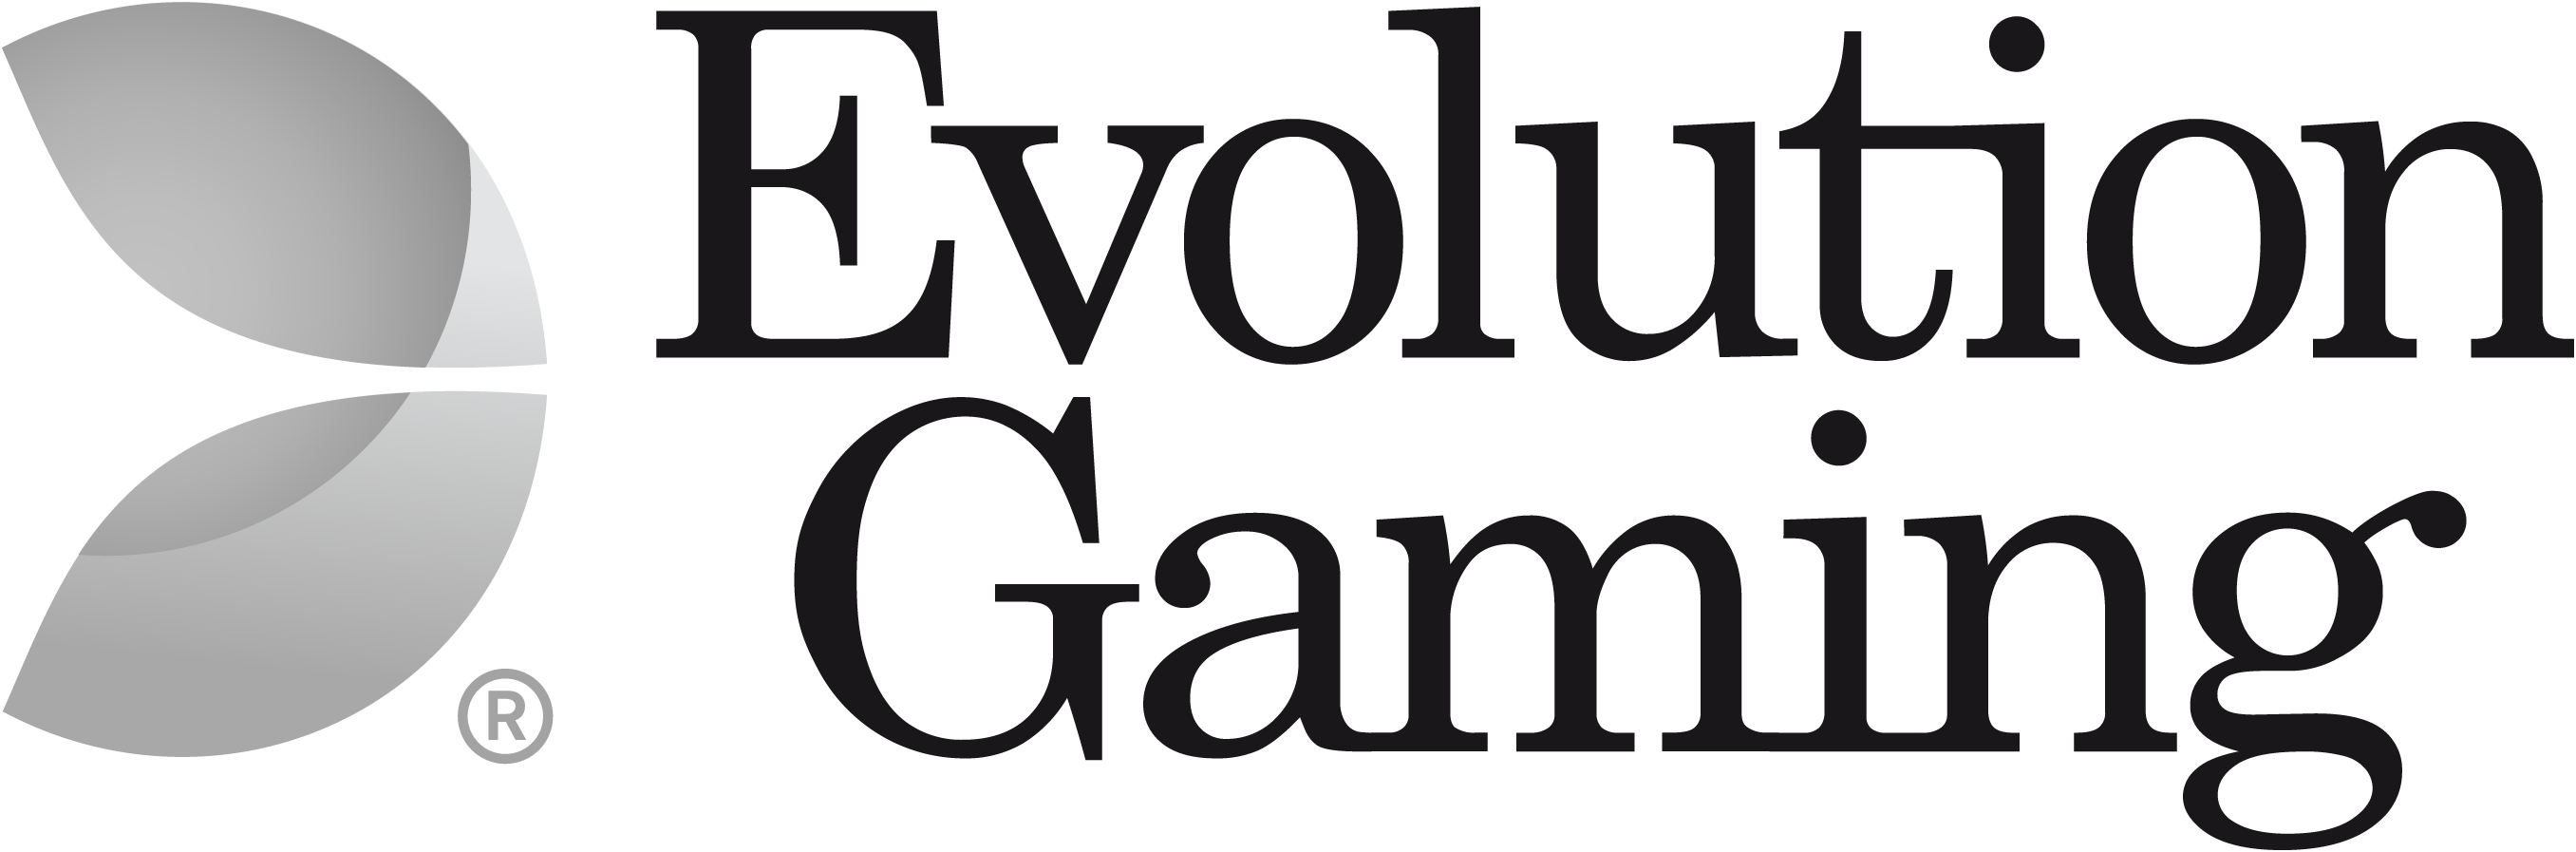 EVOLUTION GAMING